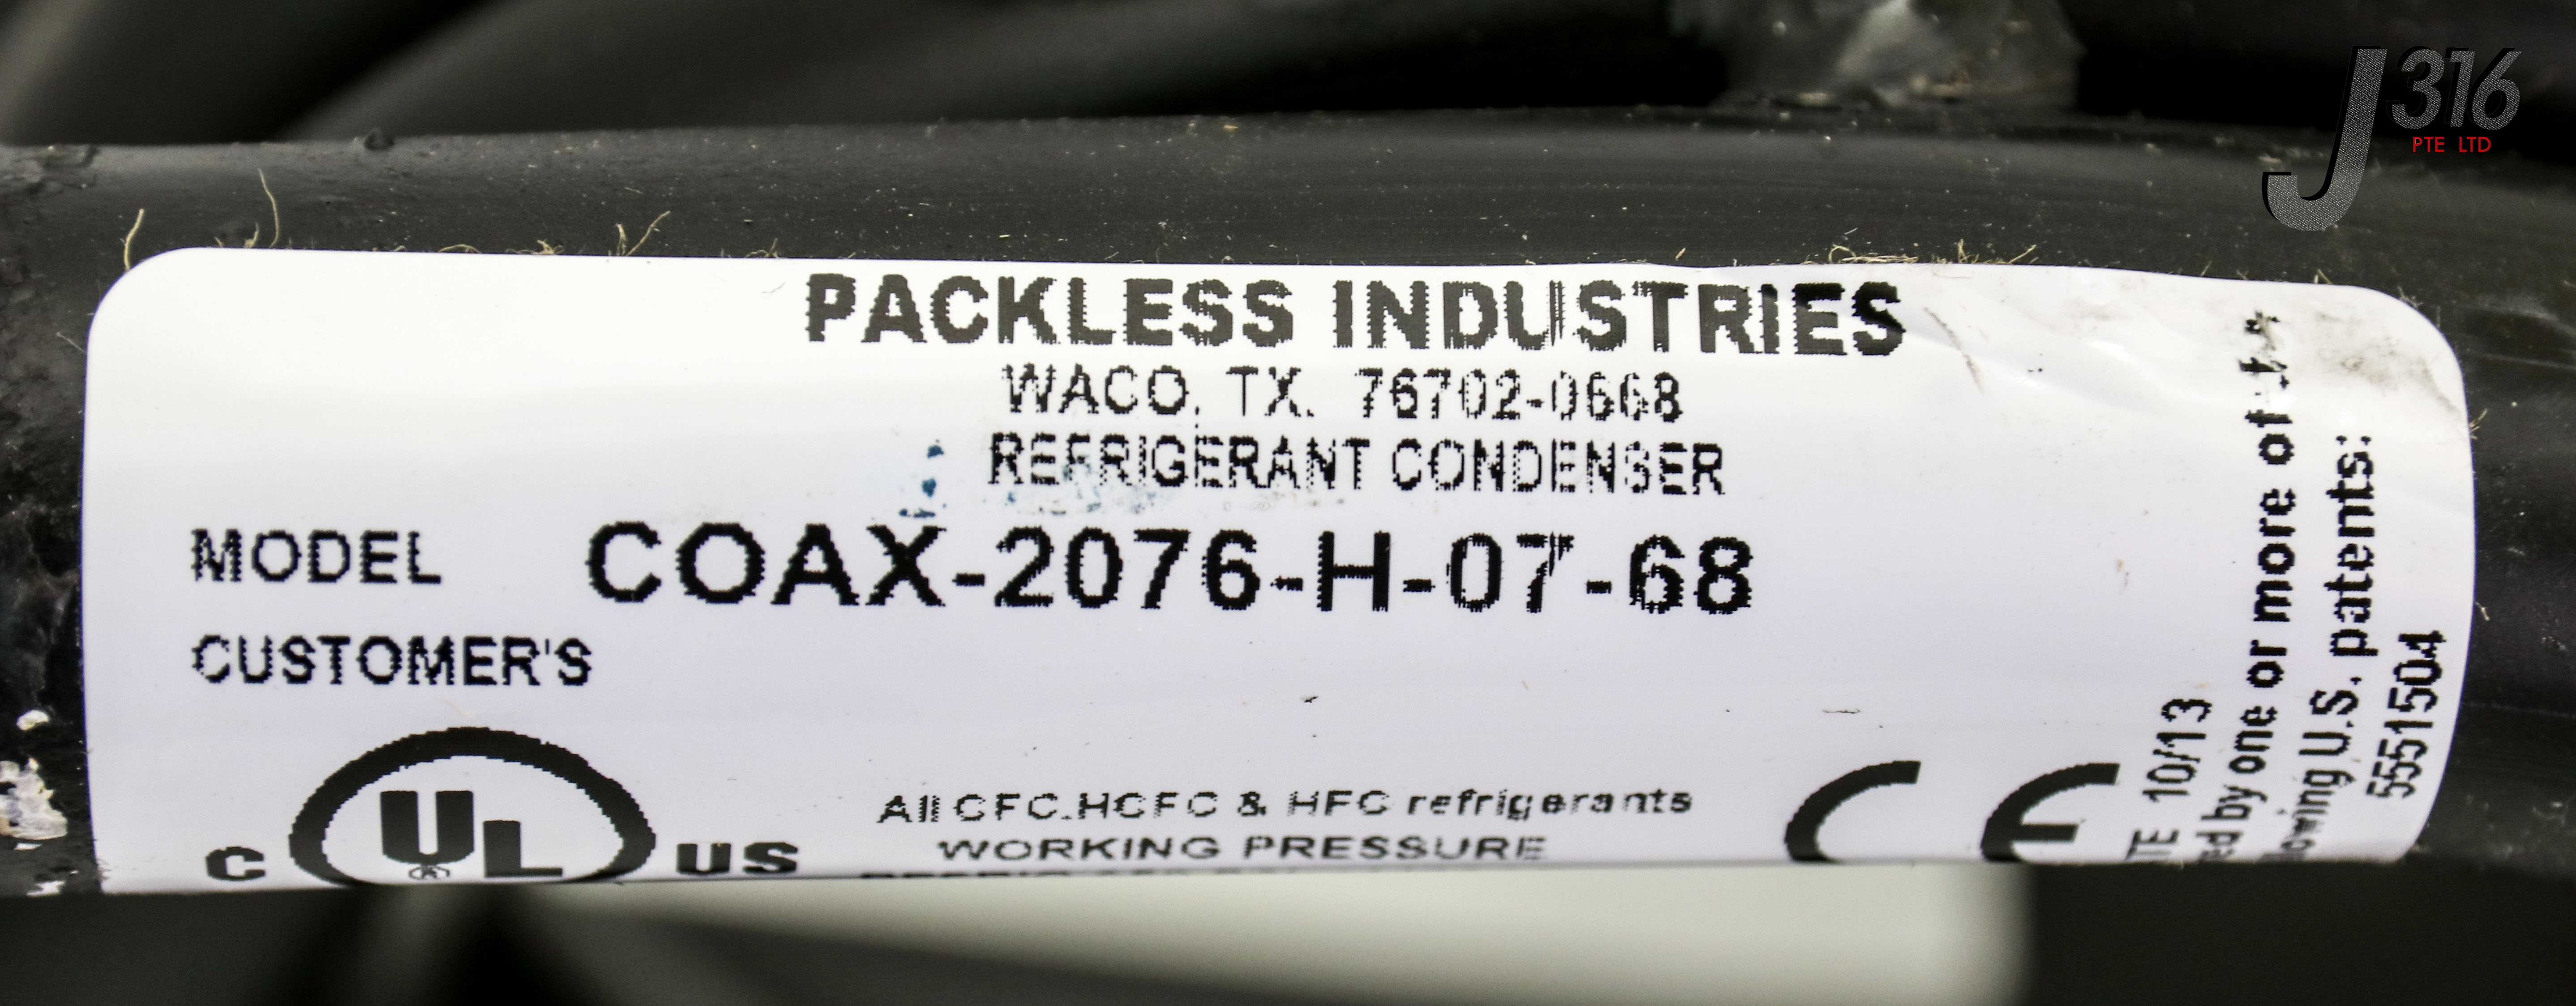 Packless Refrigerant Heat Exchangers